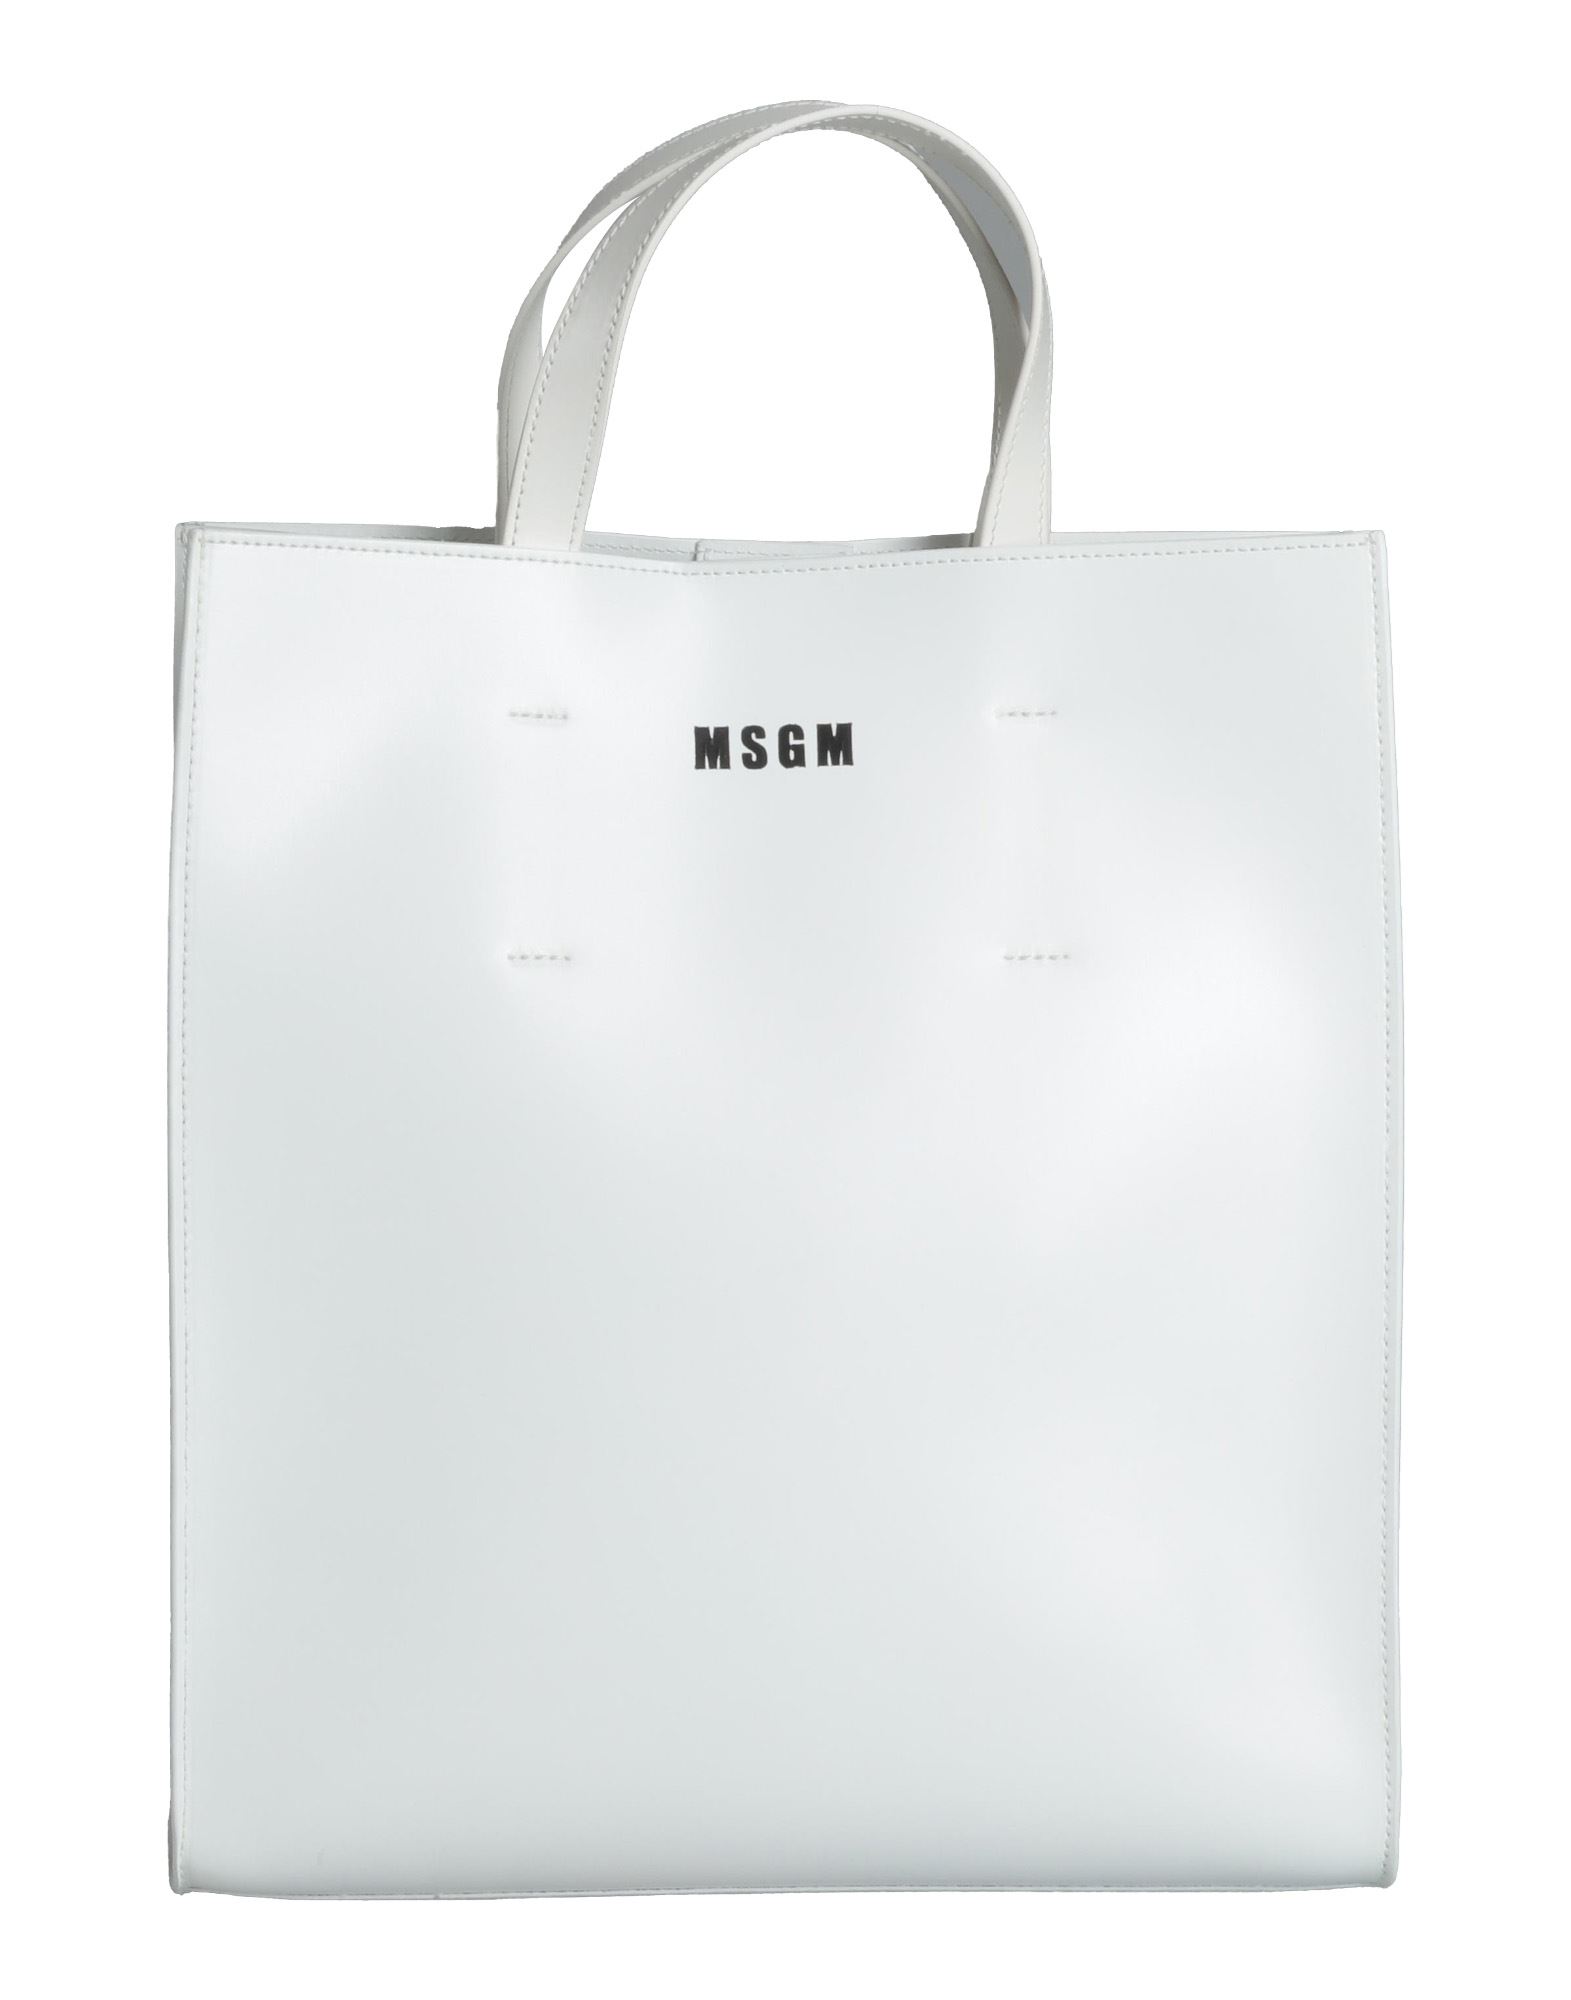 Msgm Handbags In White